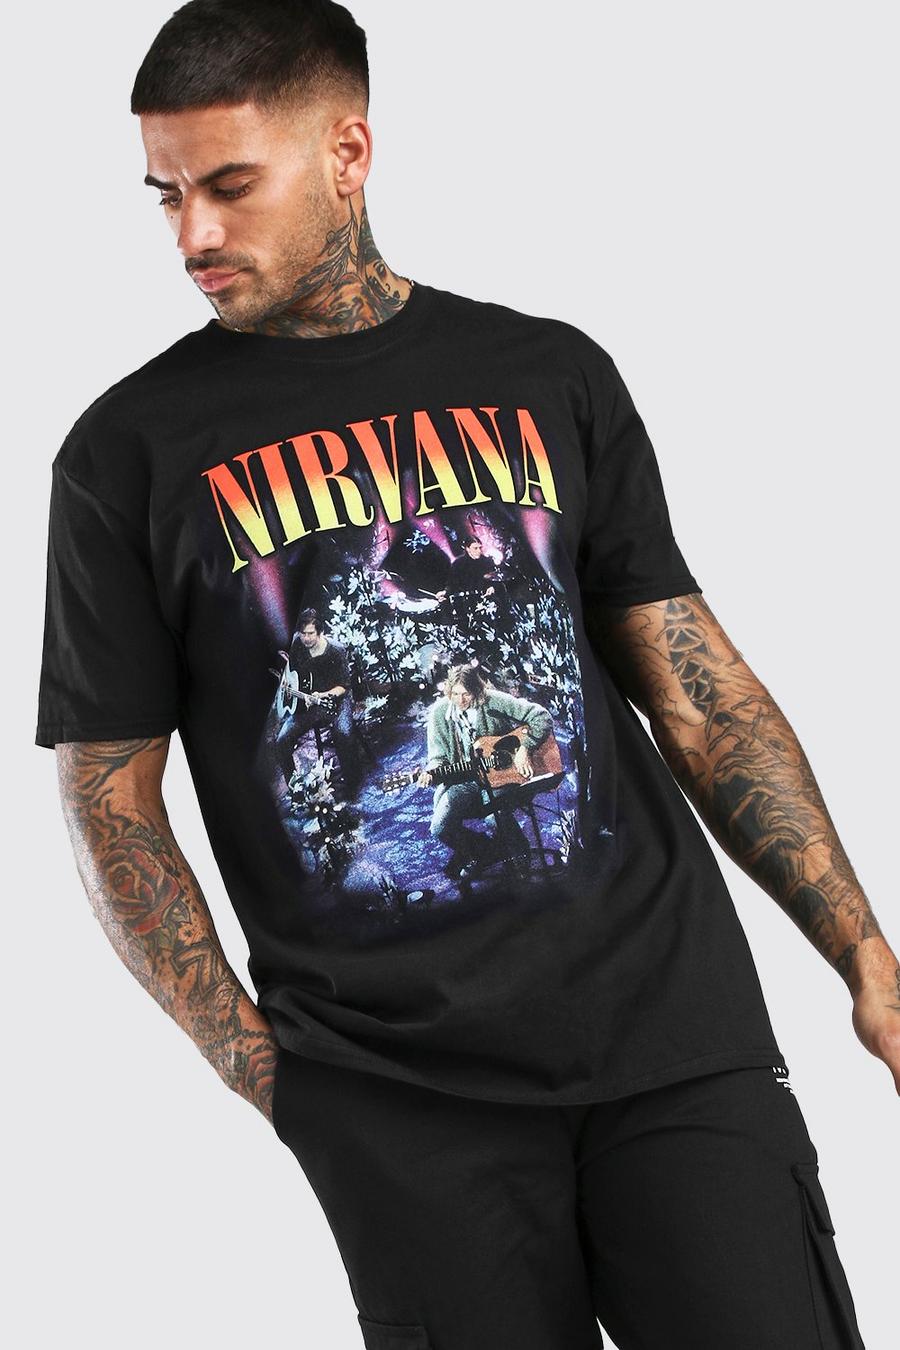 Black Oversized Nirvana Graphic T-Shirt image number 1